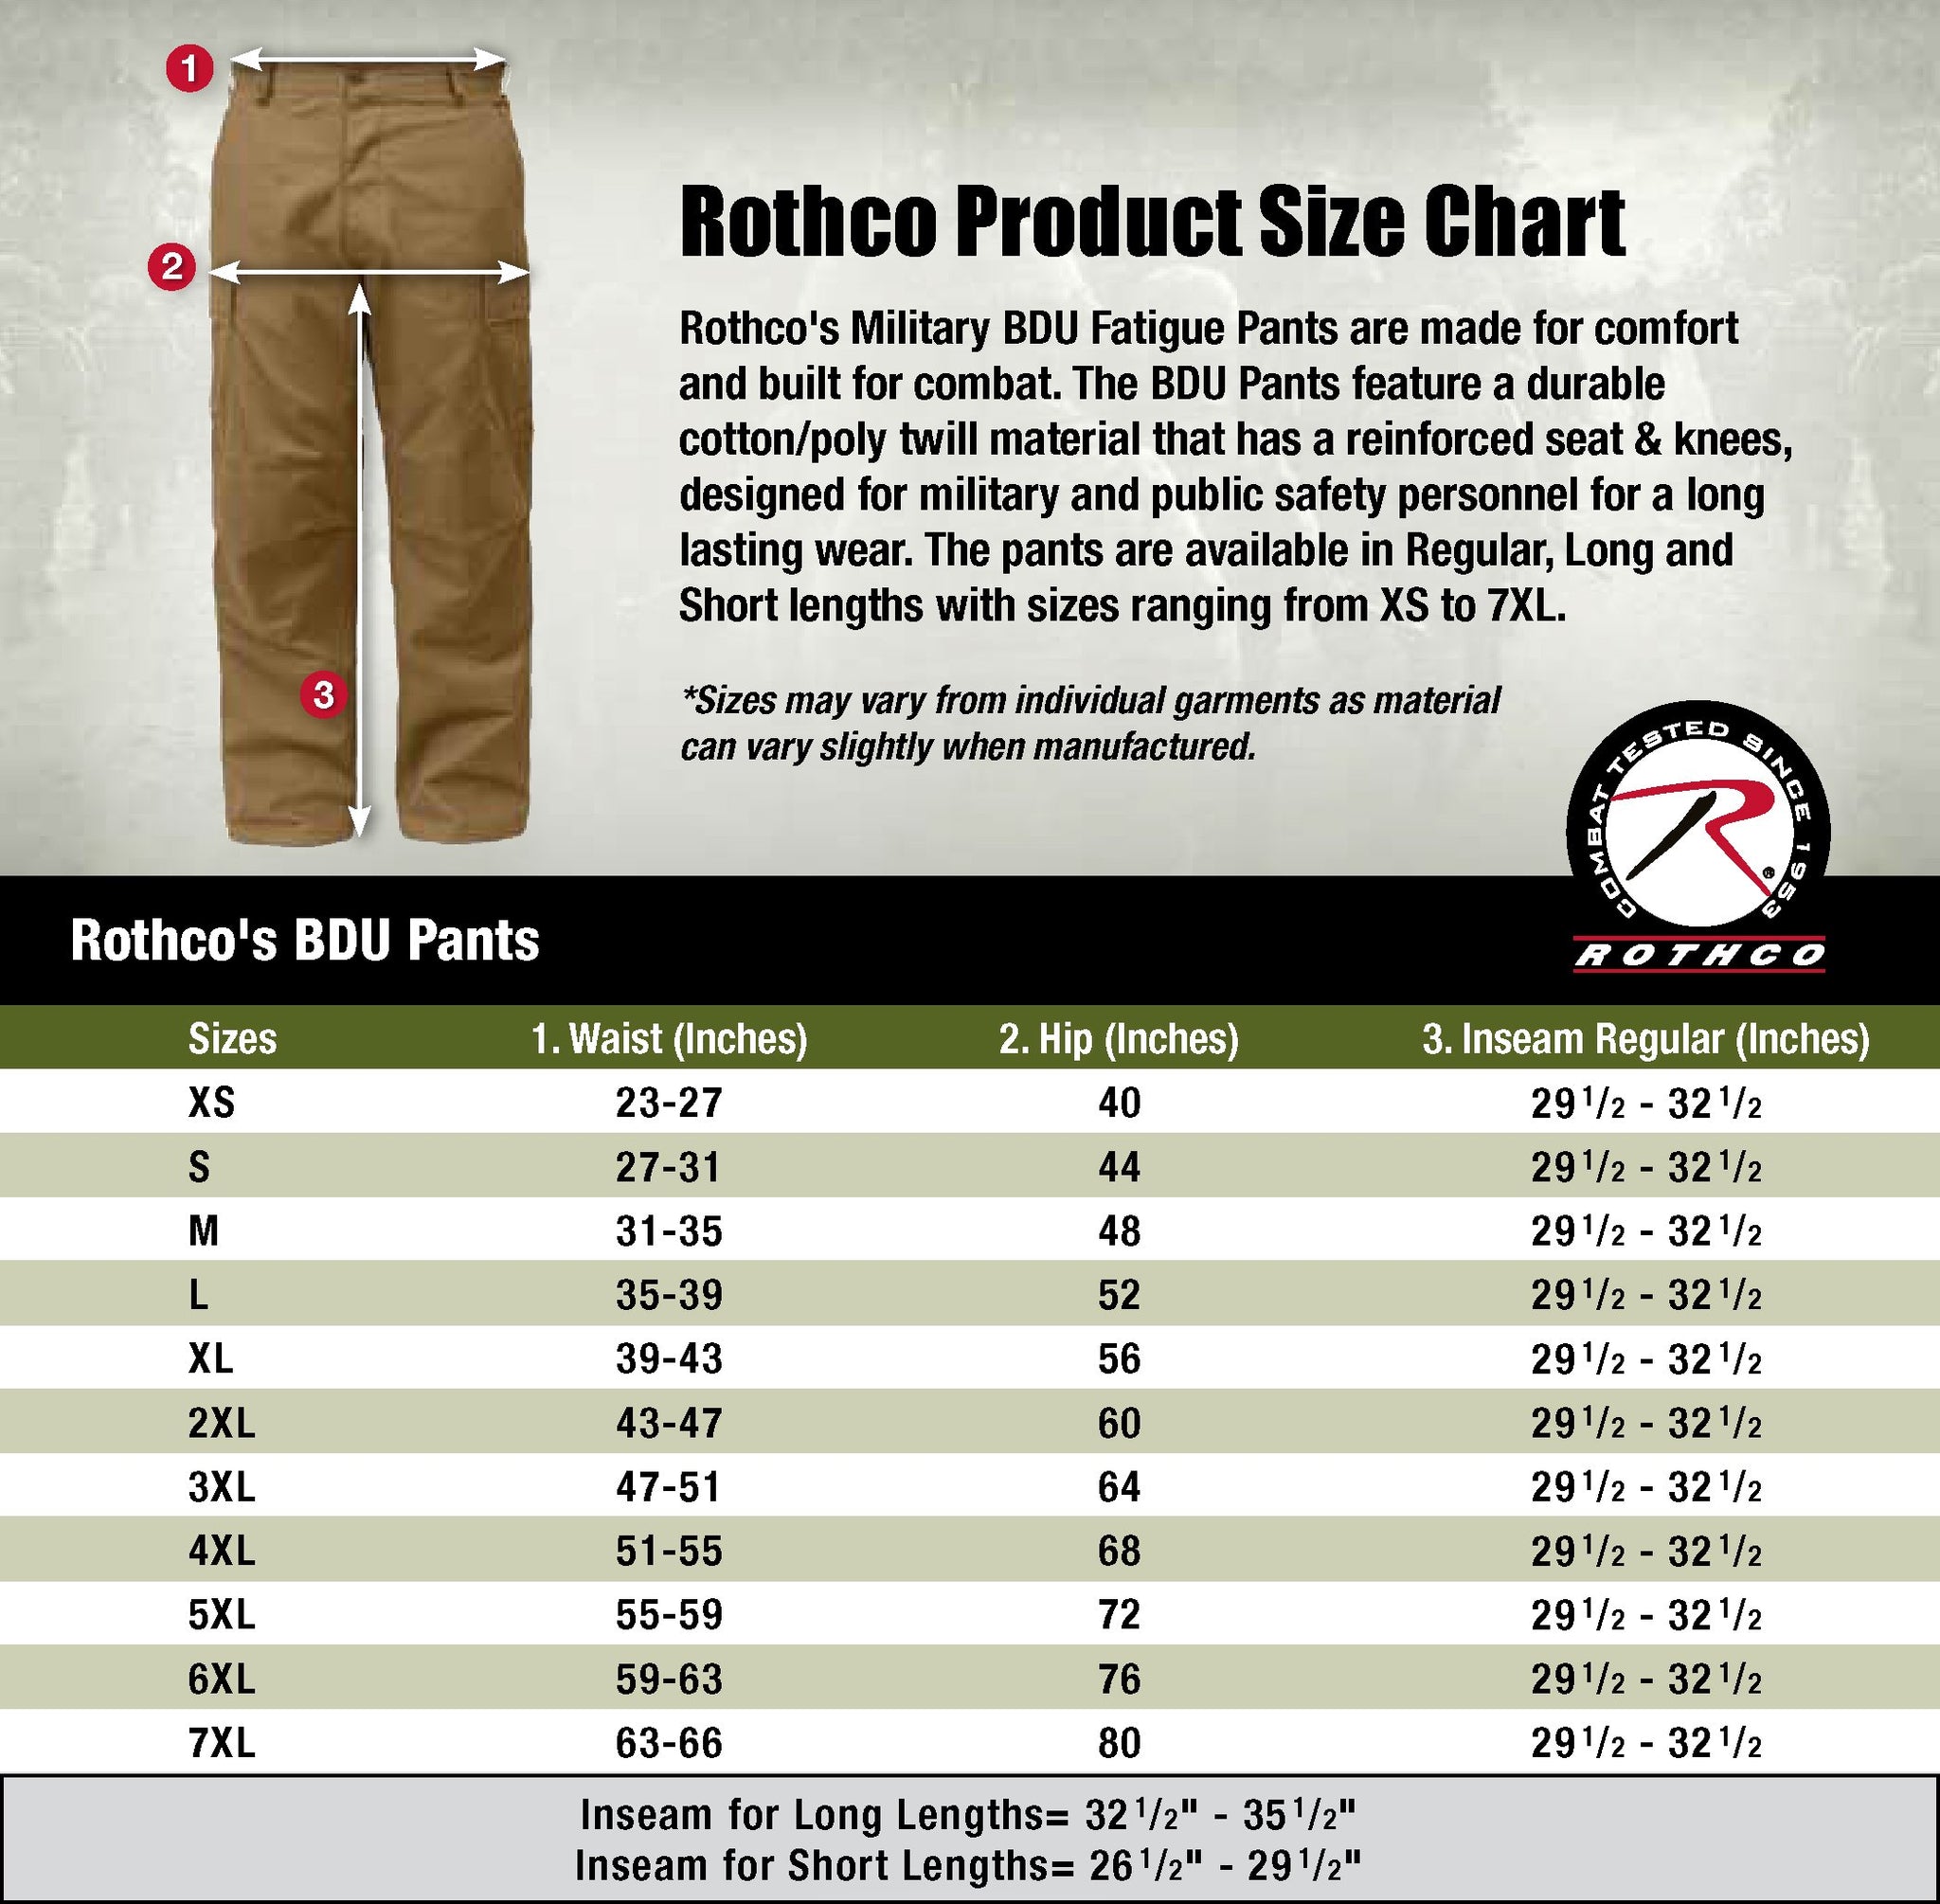 Combat Tactical Pants - BDU (Battle Dress Uniform) - Rothco